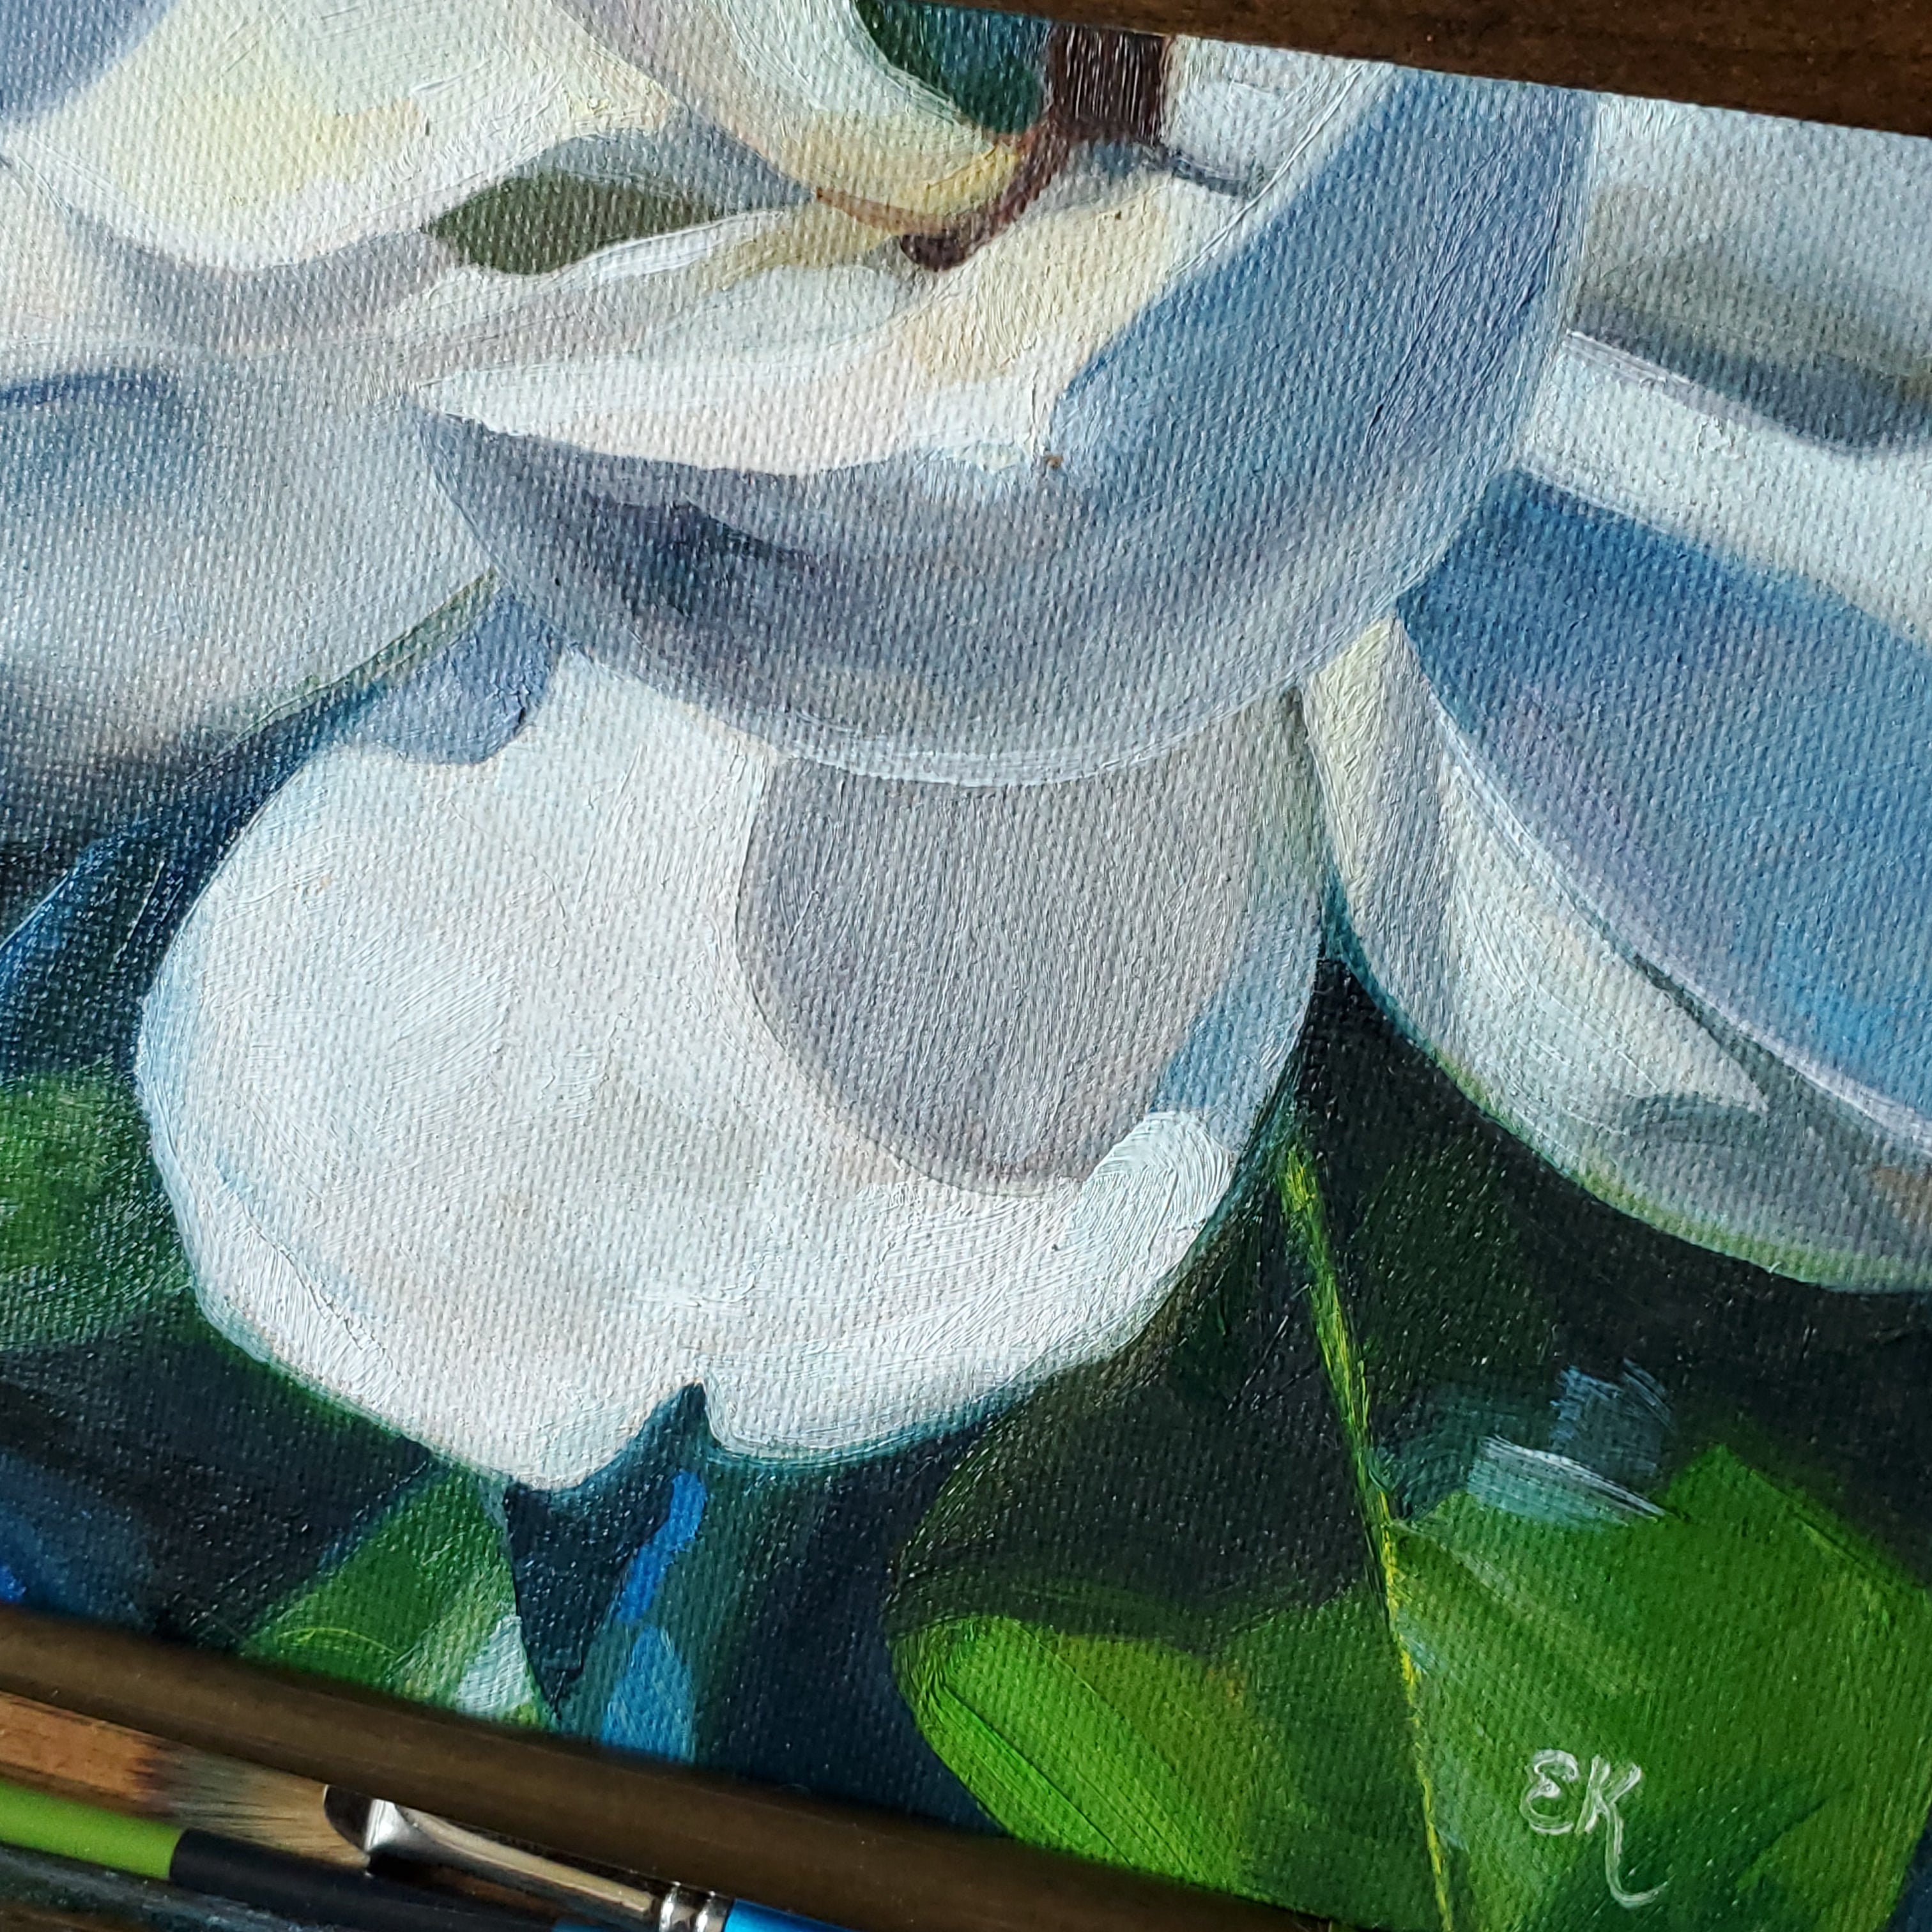 Magnolia Days || 5x7" Original Oil Painting on Canvas Panel